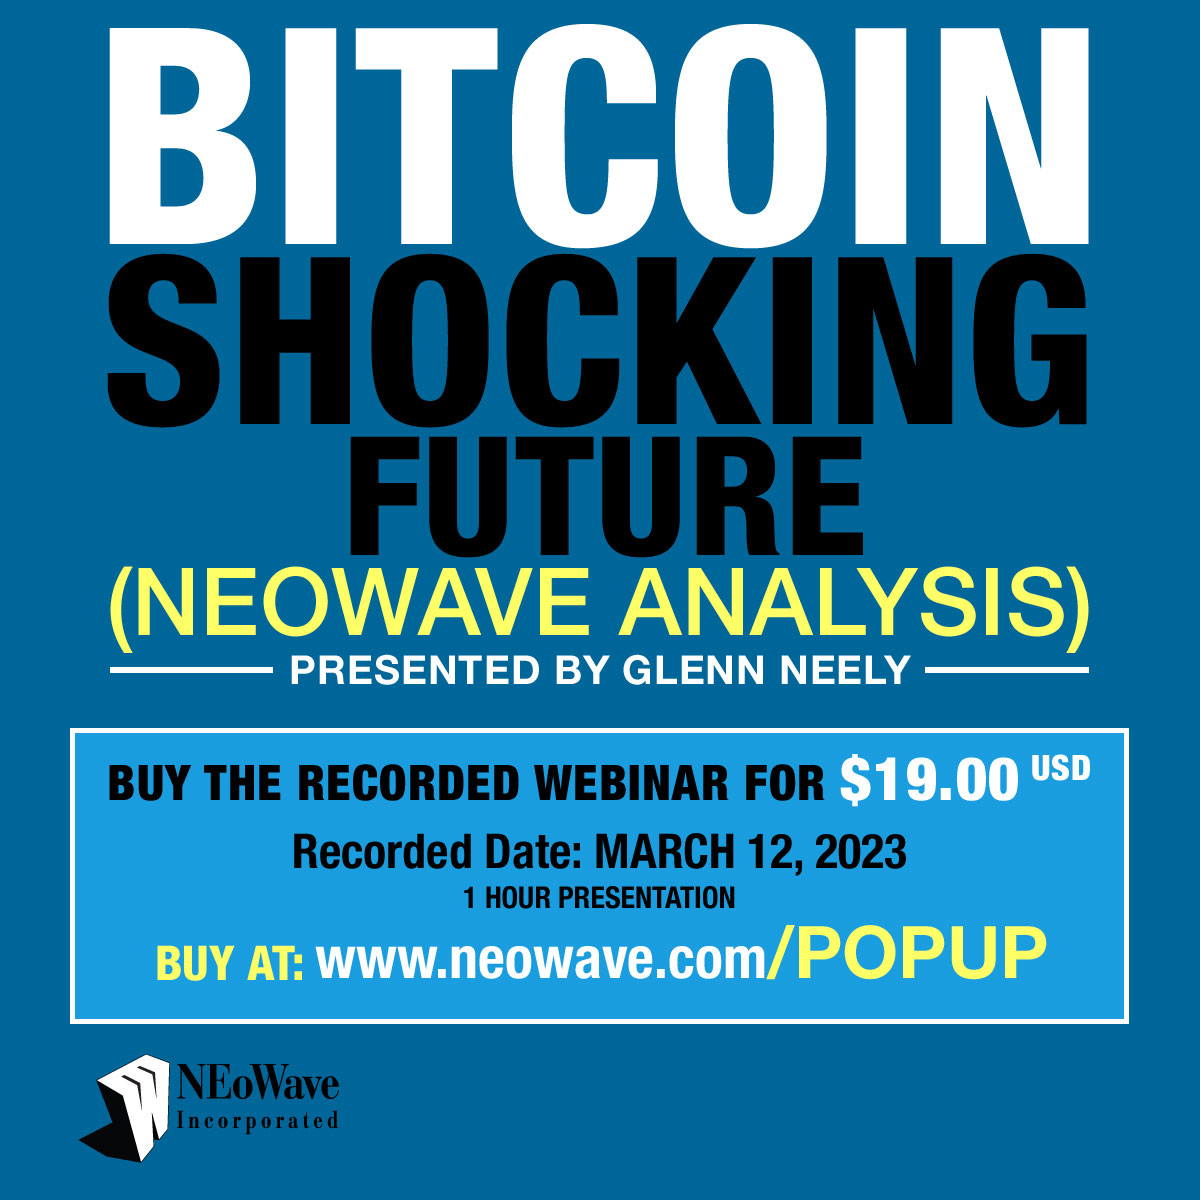 Glenn Neely presents Bitcoin's Shocking Future webinar on Sunday, March 12, 2023